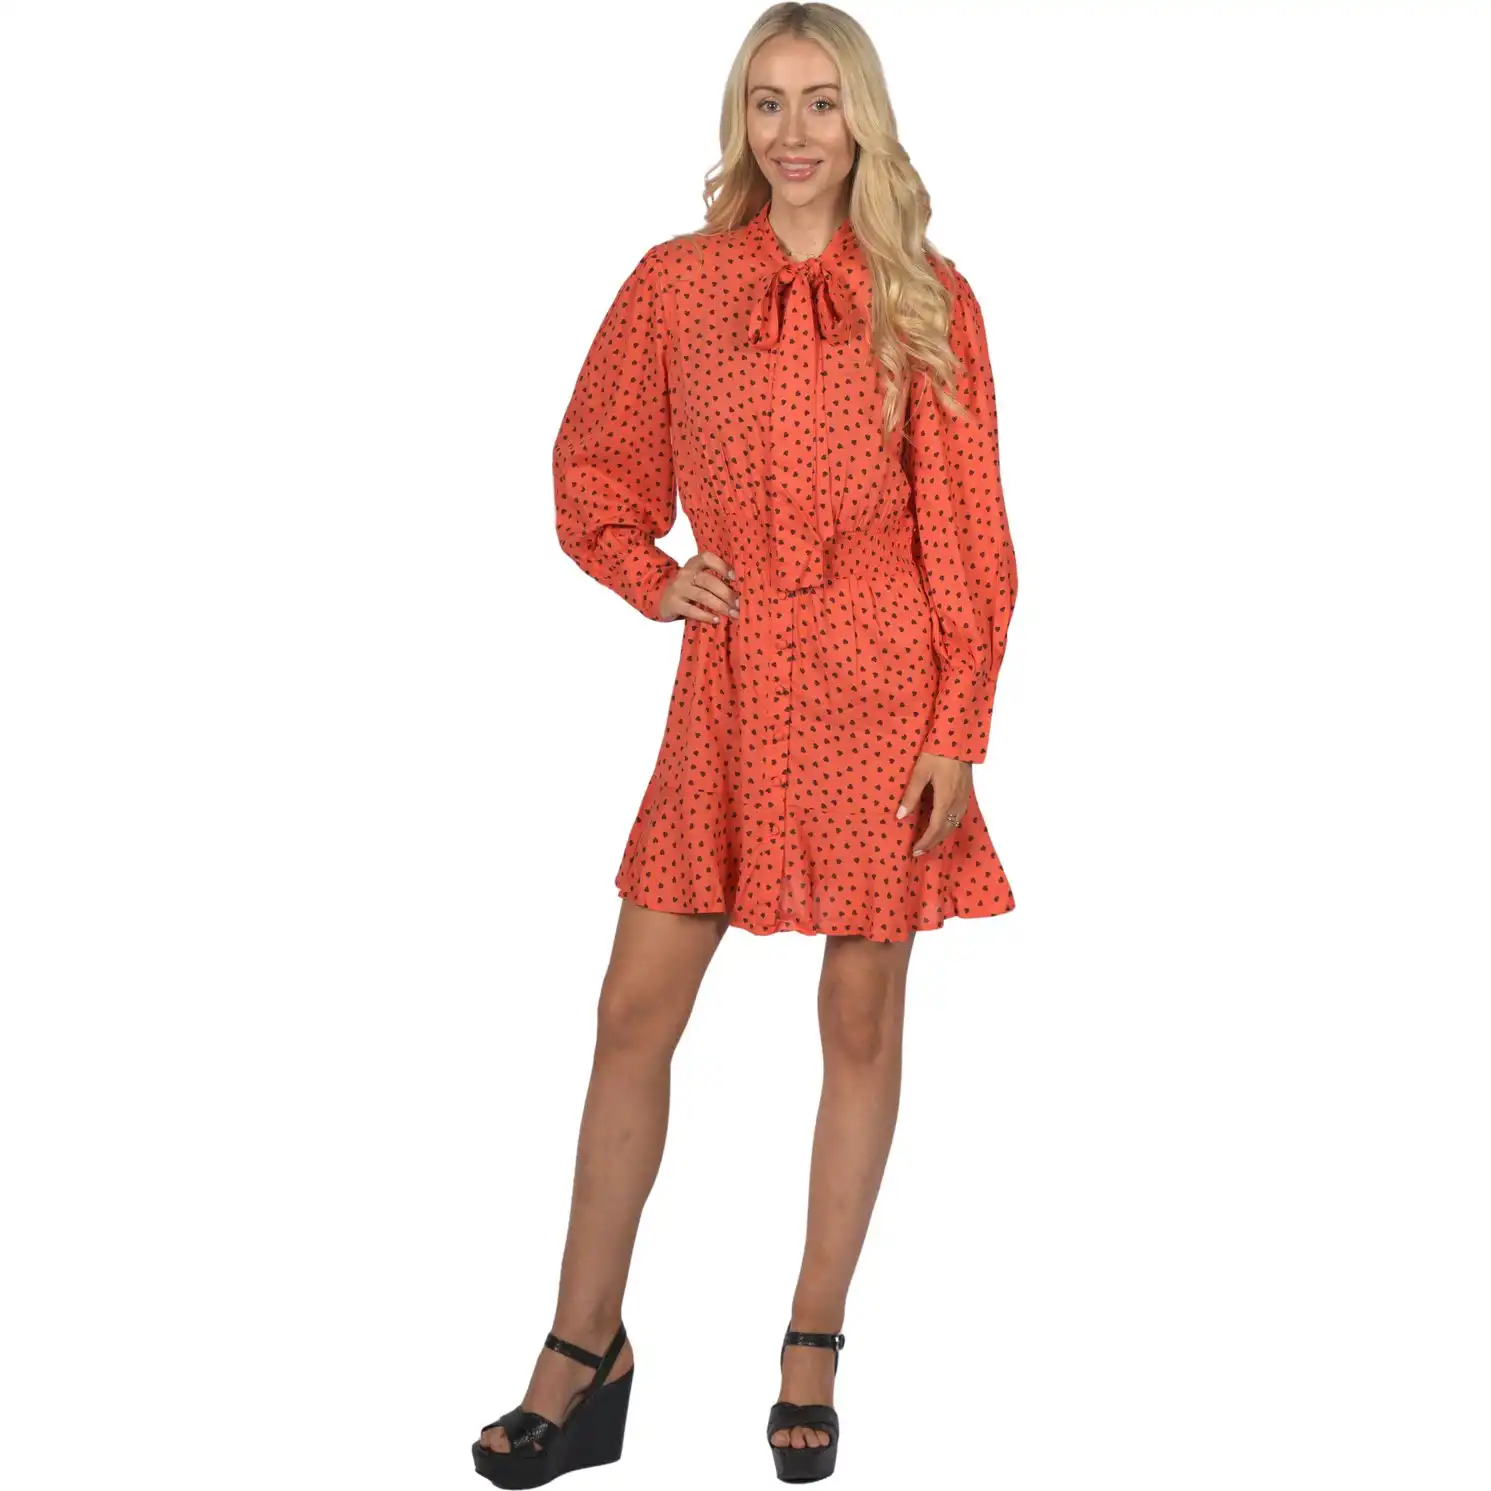 Topshop Women's Long Sleeve Orange Heart Print Dress